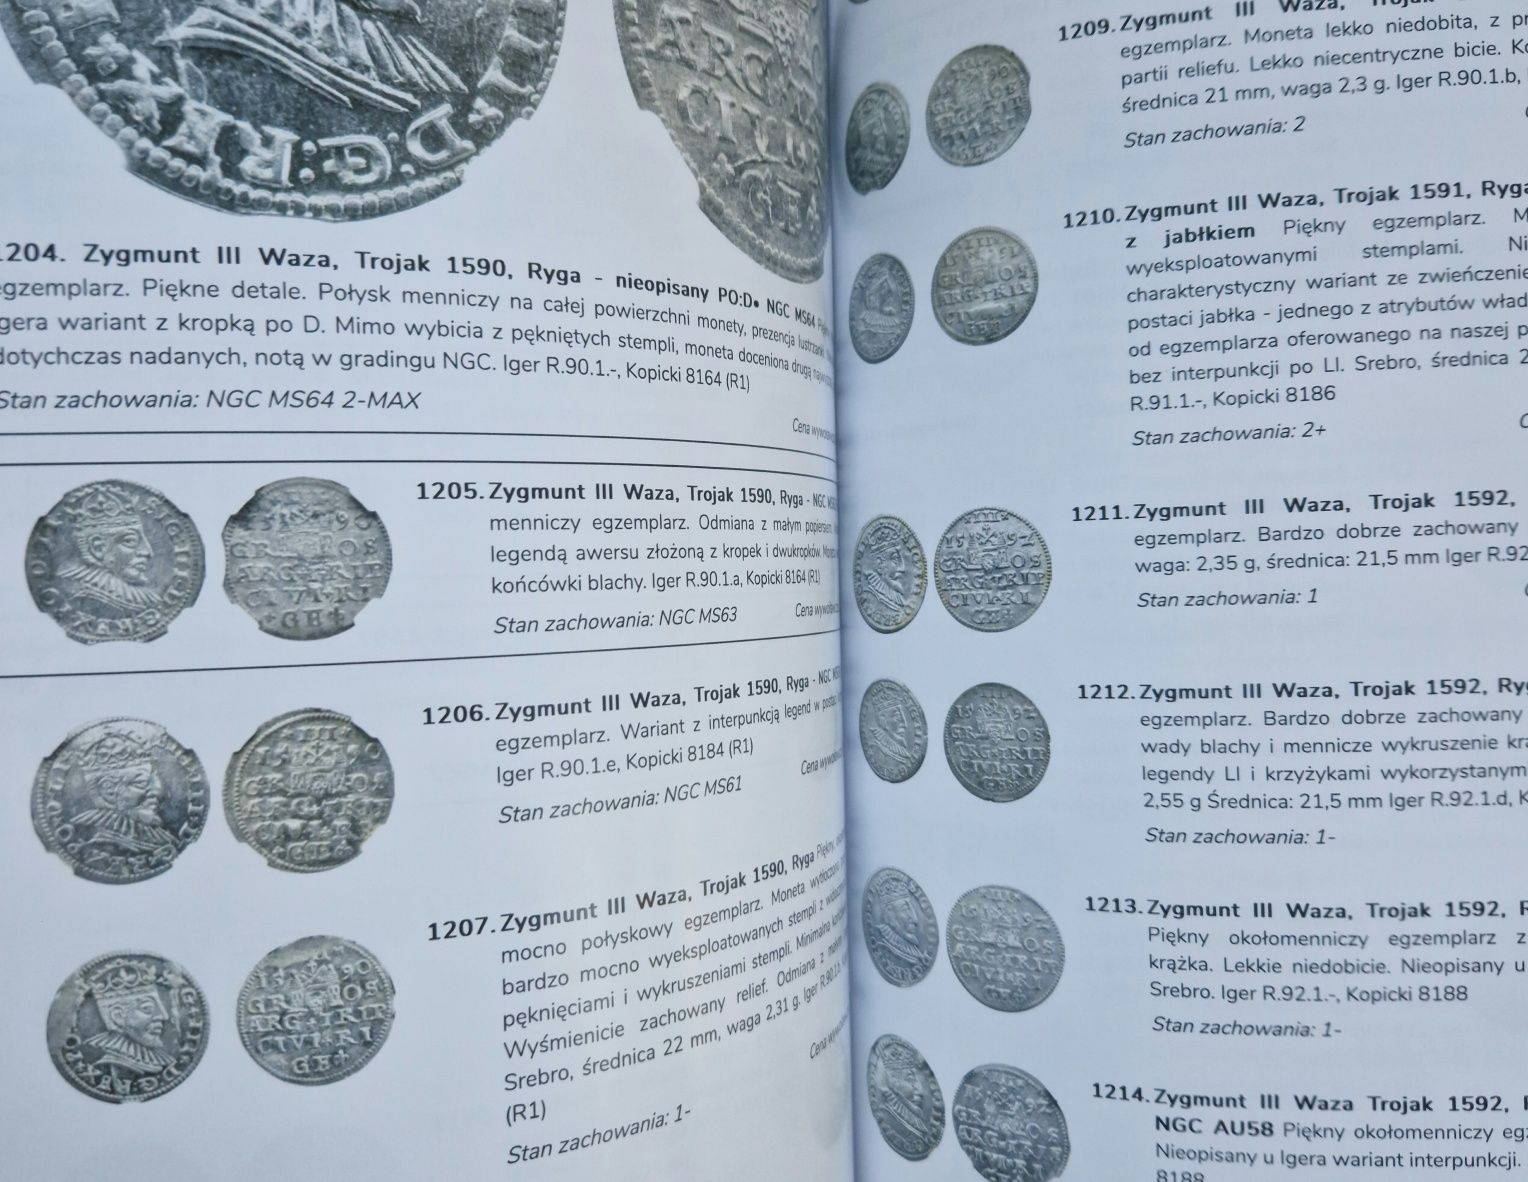 Katalog aukcyjny monet RDA aukcja 4 numizmatyka album